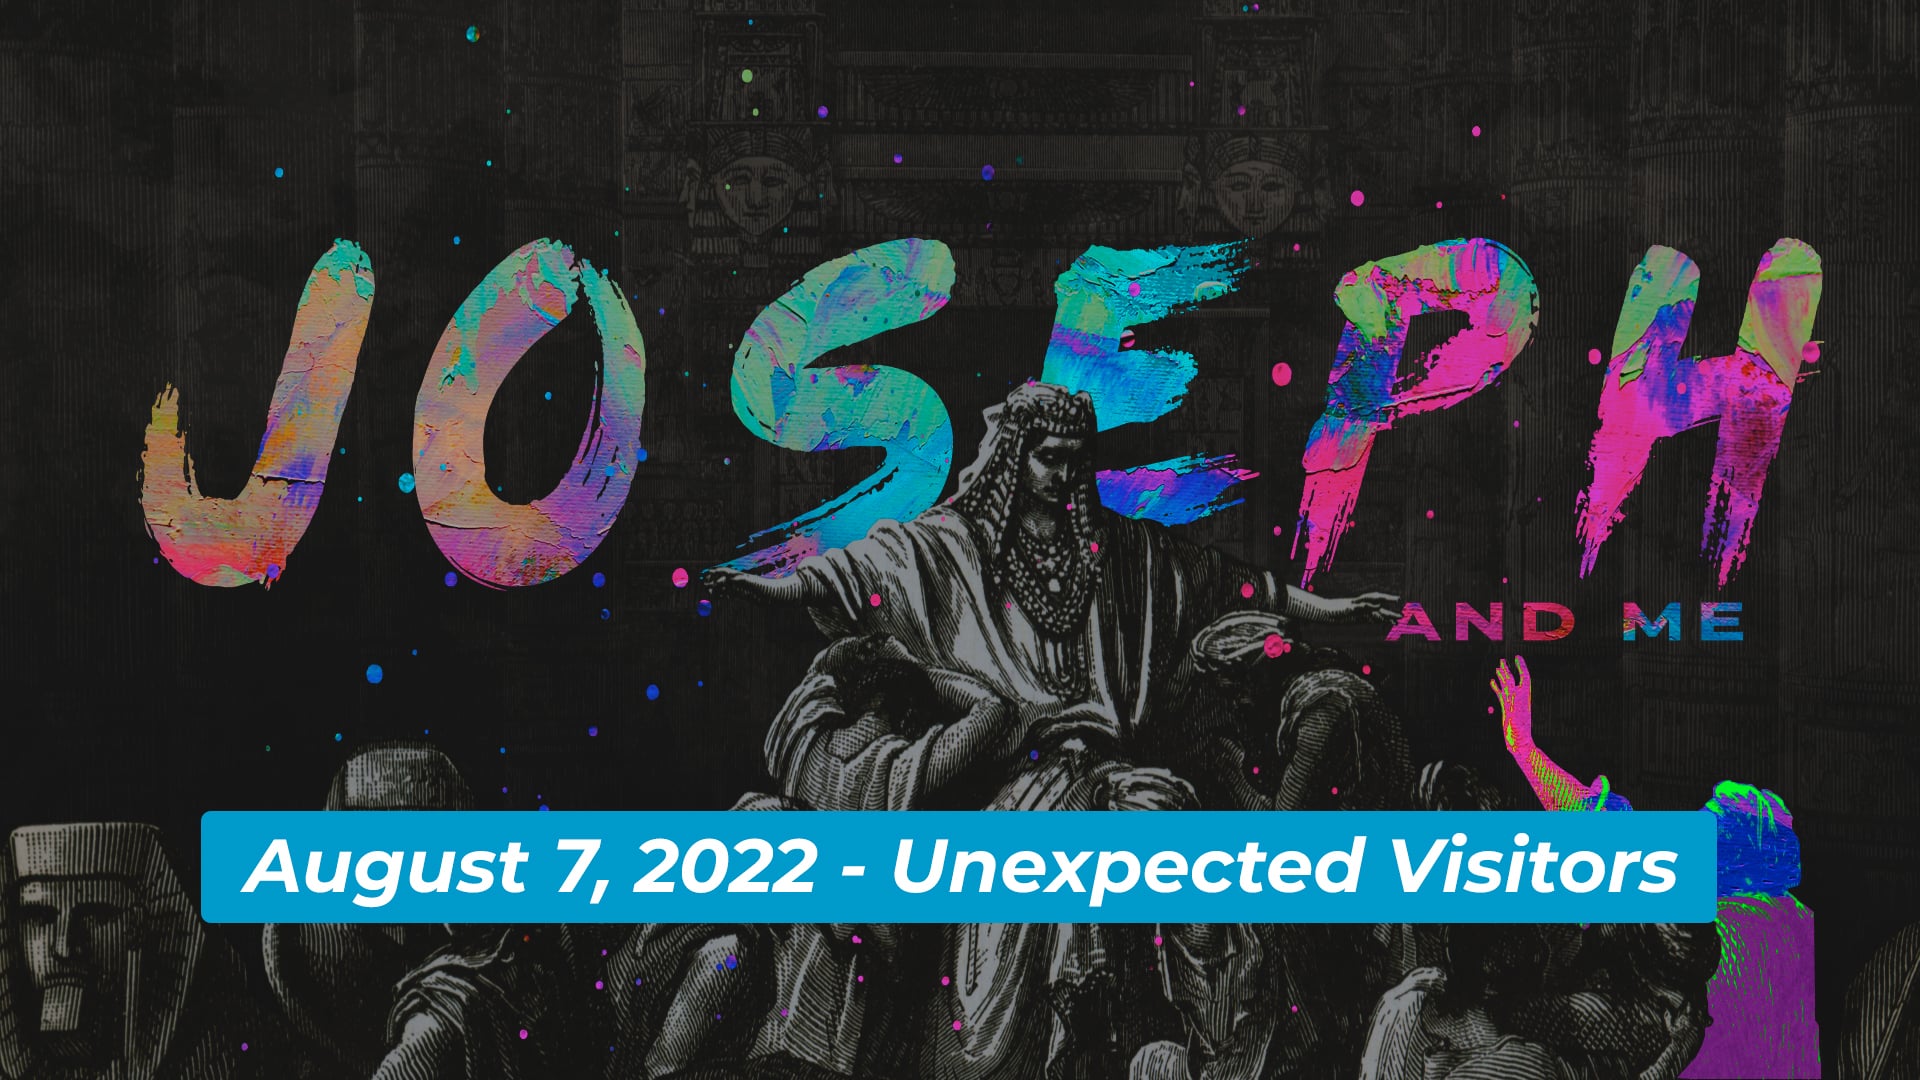 August 7, 2022 - Joseph & Me: Unexpected Visitors